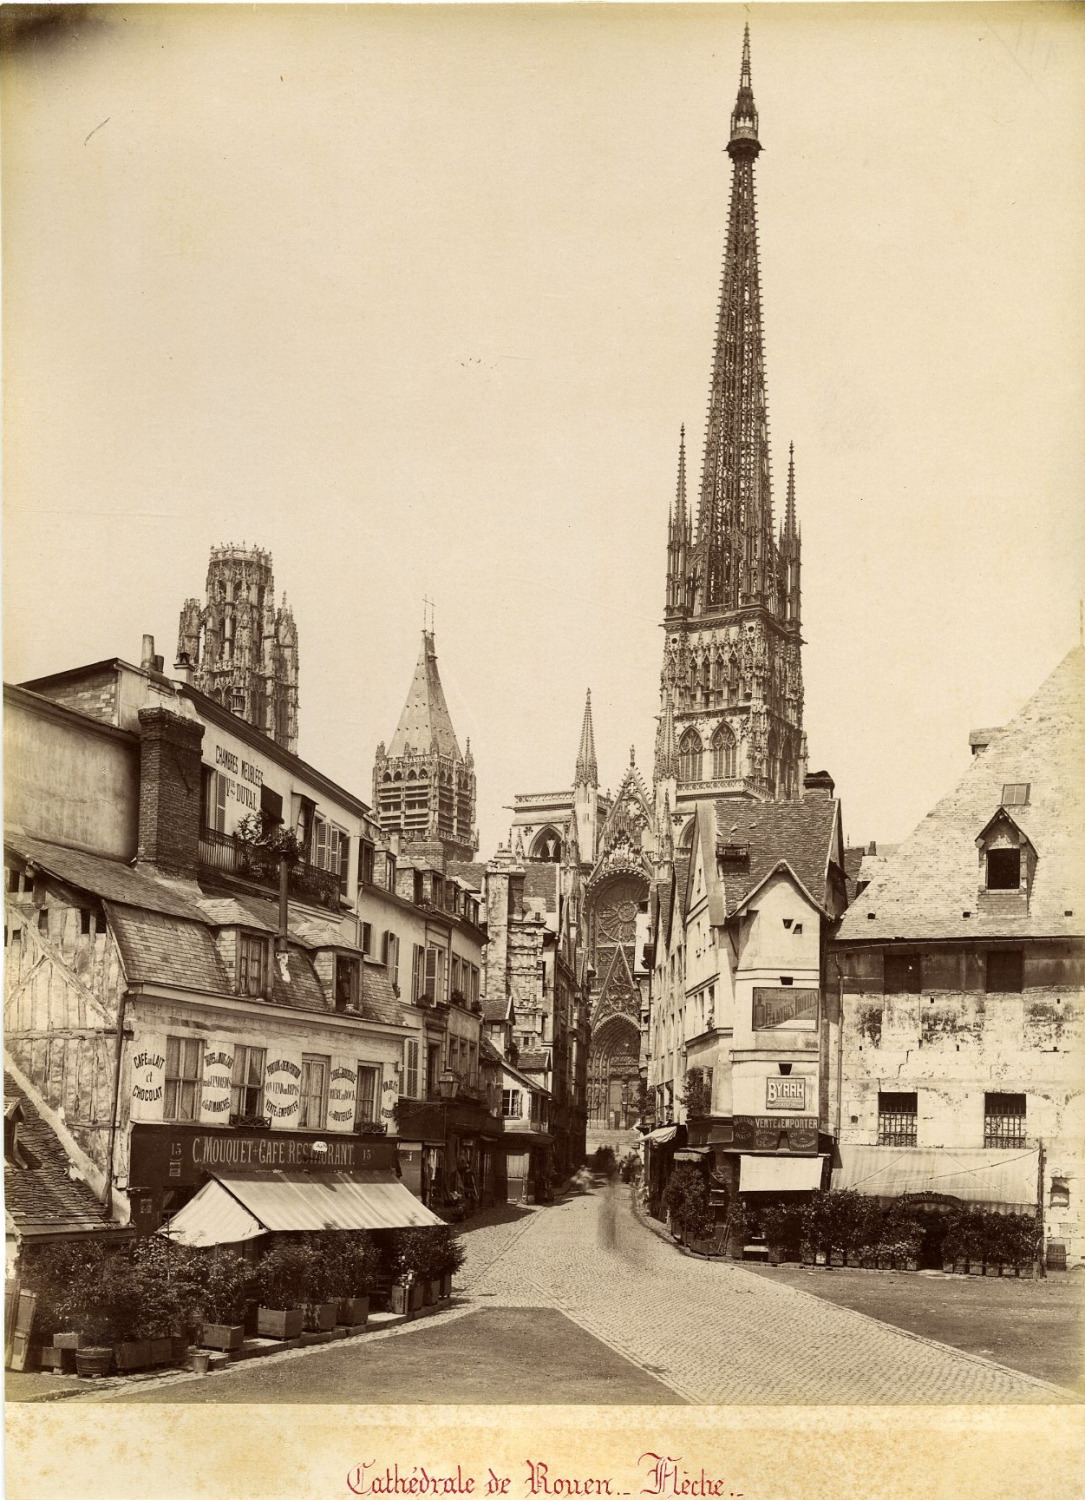 France, Rouen Cathedral France. Vintage Albumen Print. Albumin Print  